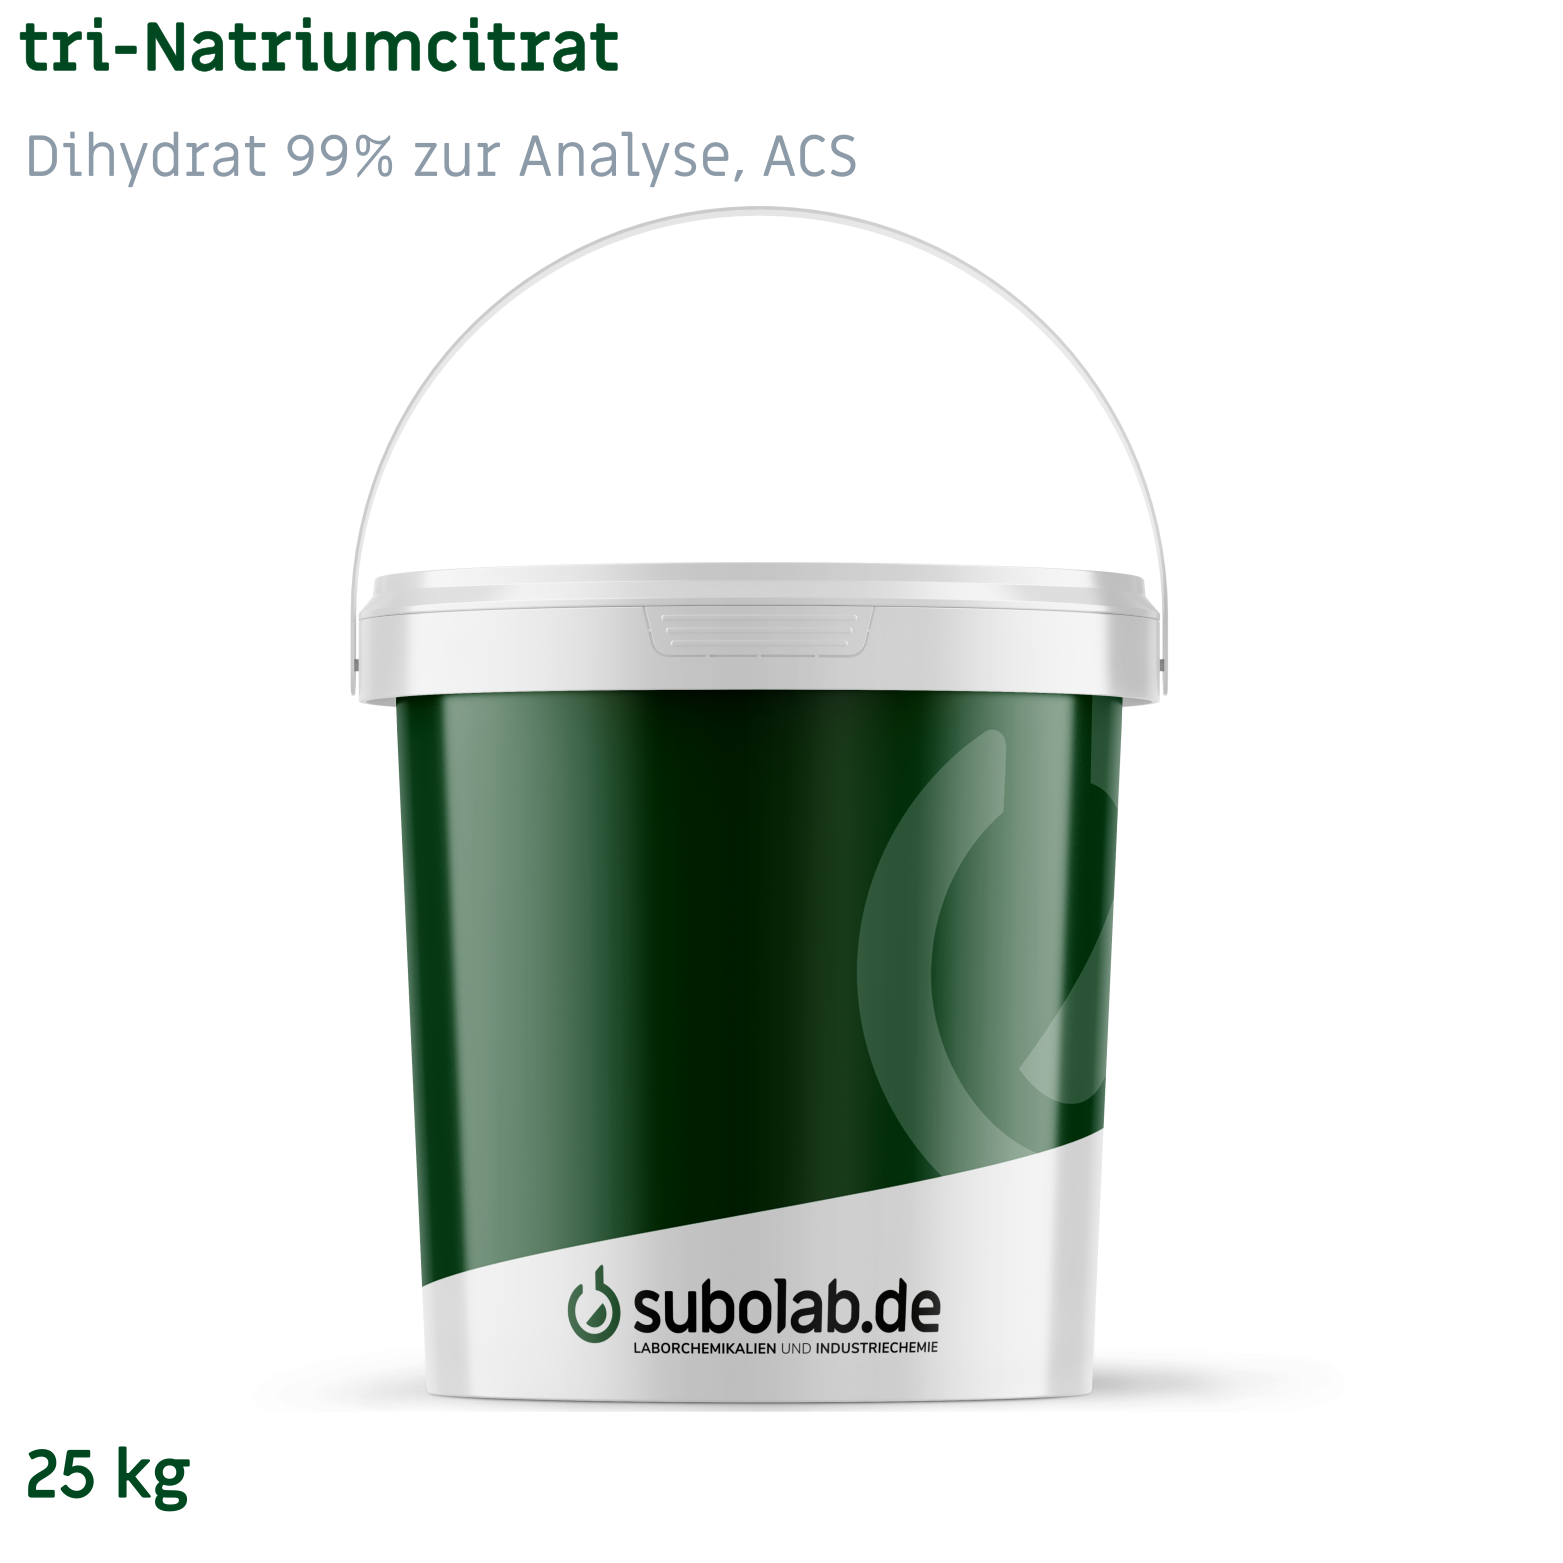 Bild von tri-Natriumcitrat - Dihydrat 99% zur Analyse, ACS (25 kg)